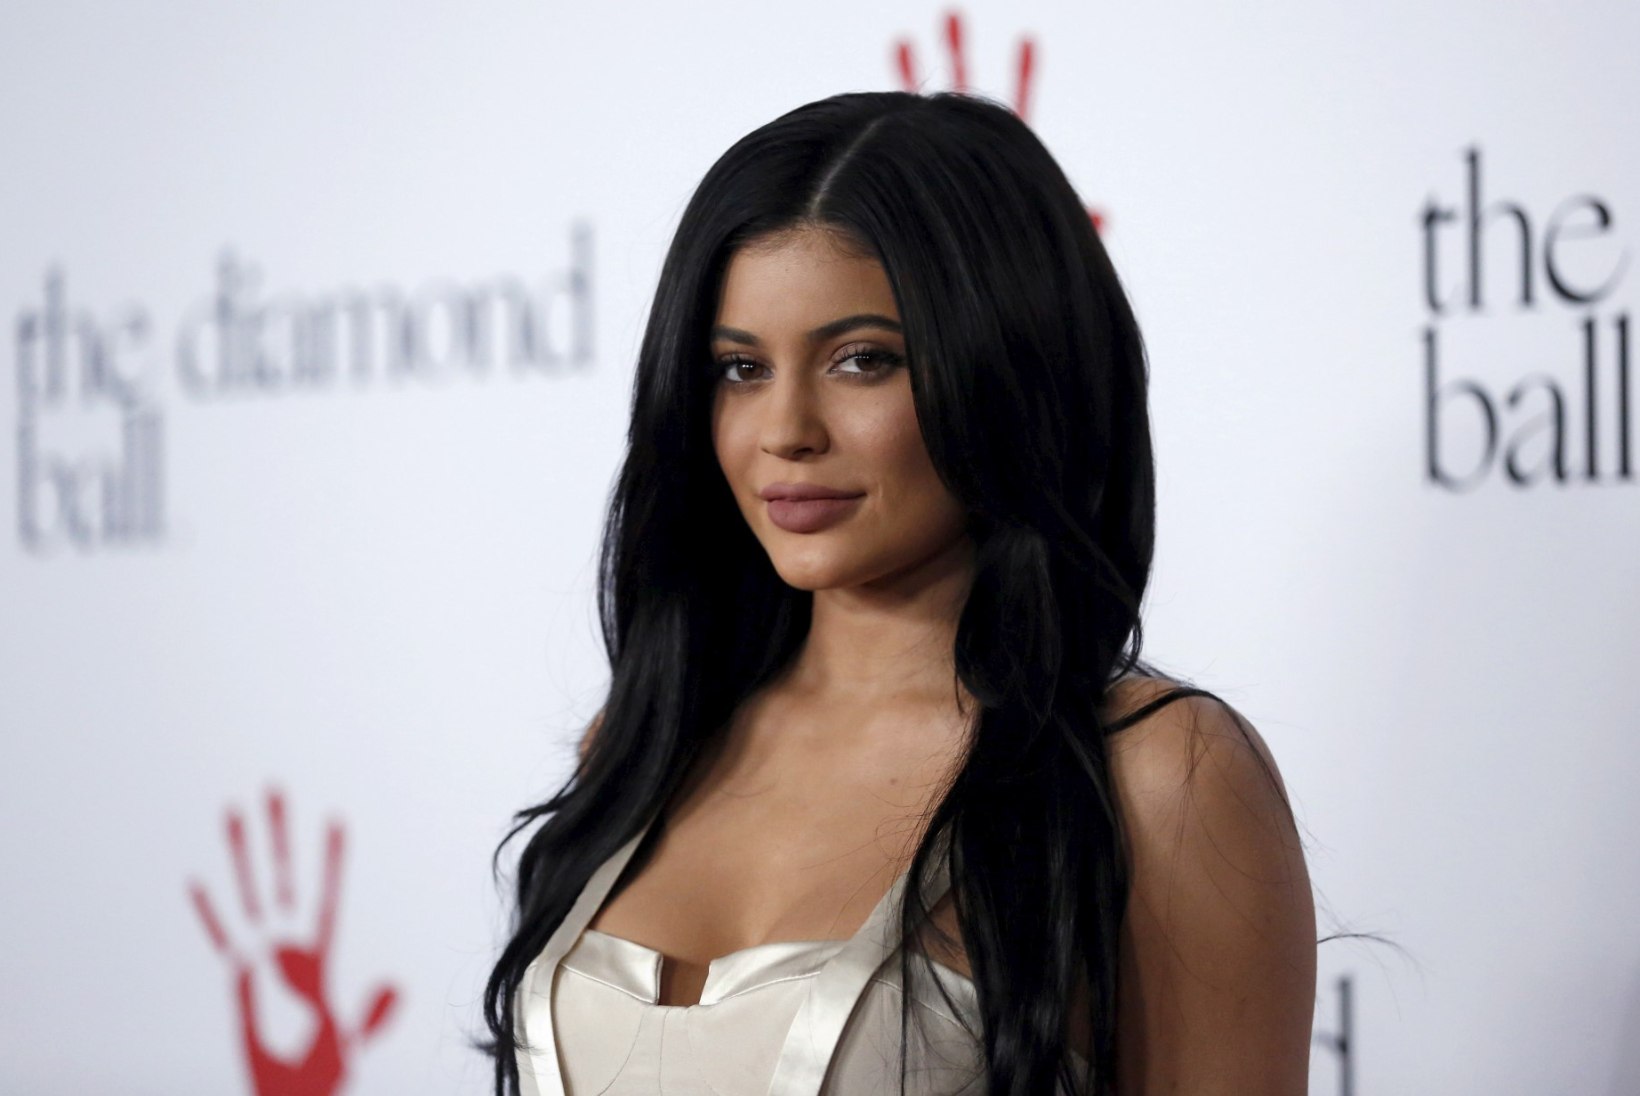 MILJON DOLLARIT POSTITUS! Kylie Jenner (20) on edukaim Instagrami staar